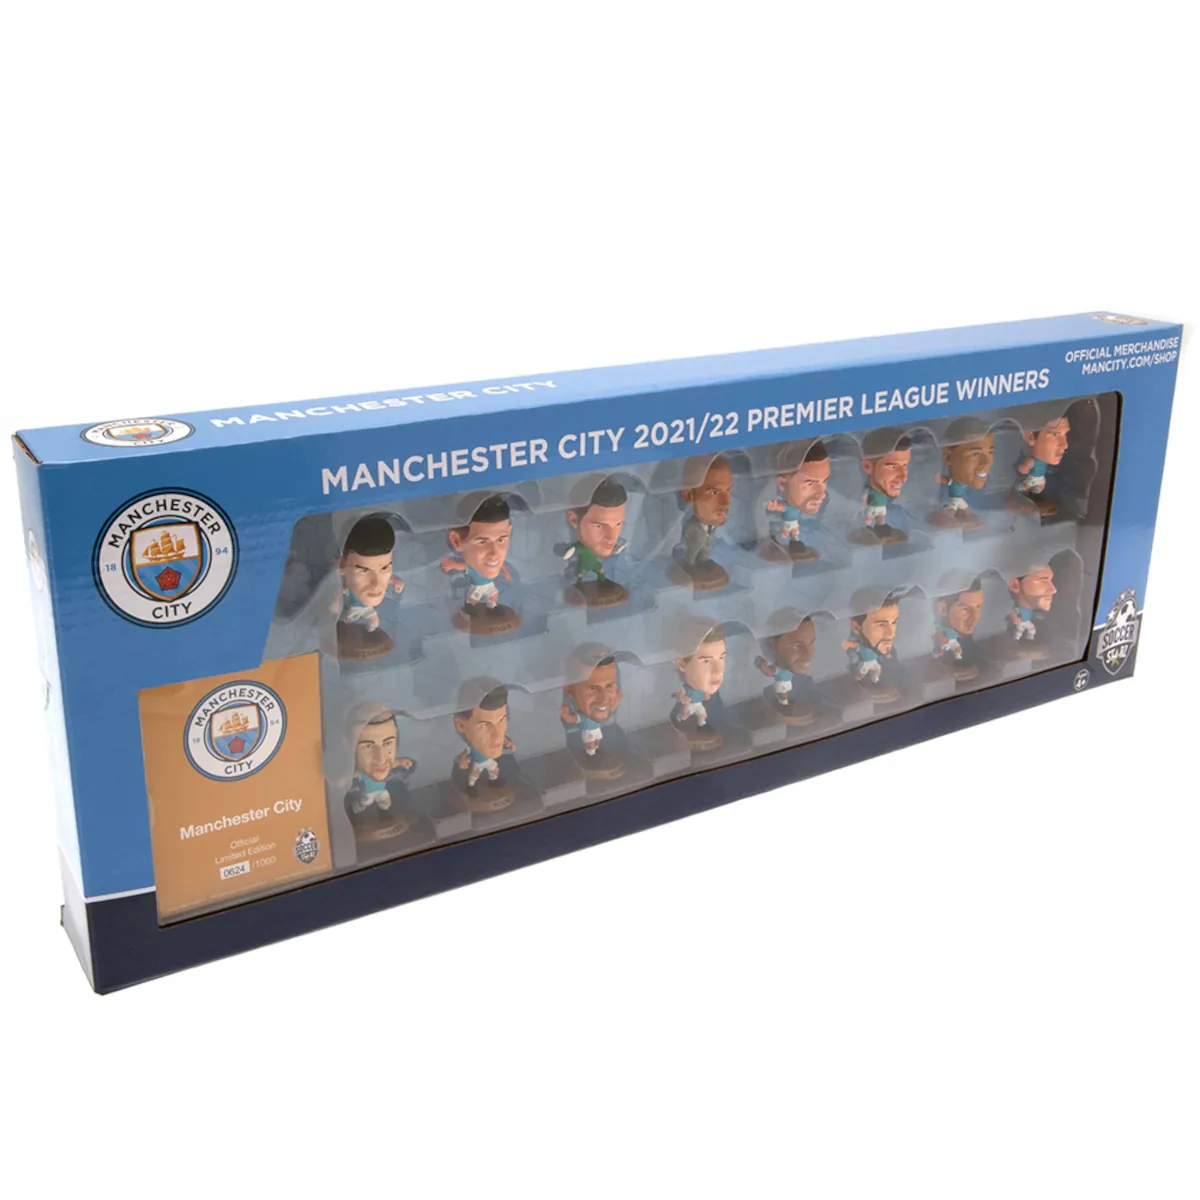 TM-01352 Manchester City FC SoccerStarz 16 Player Team Pack 2021-22 Premier League Champions Collectable Figures Box